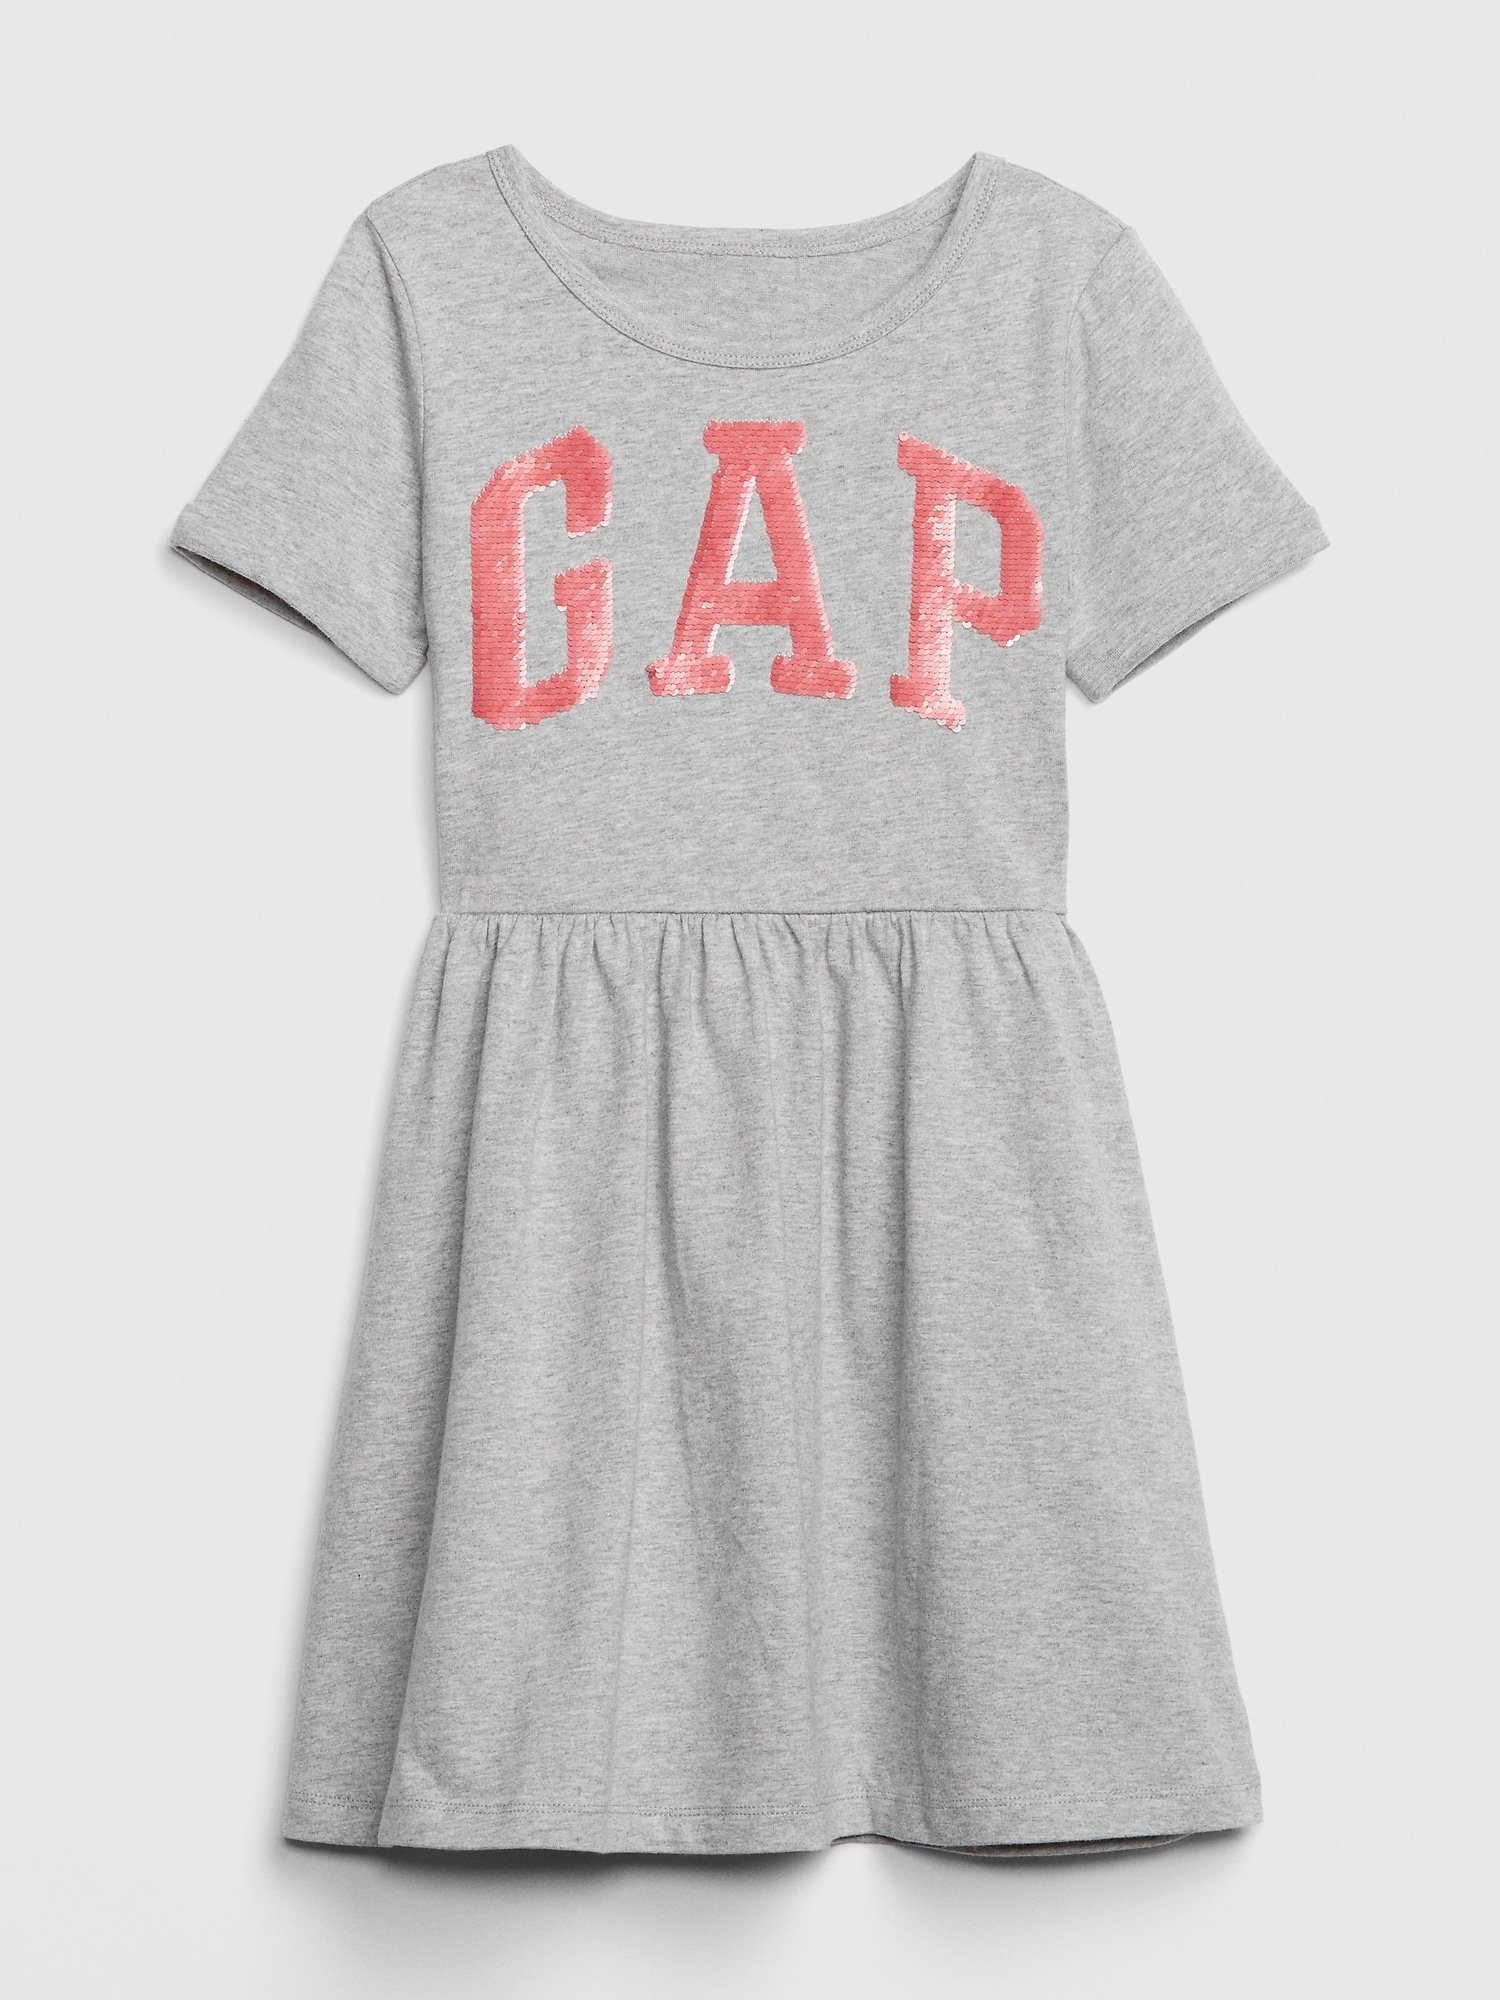 Gap Logo Kısa Kollu Elbise product image